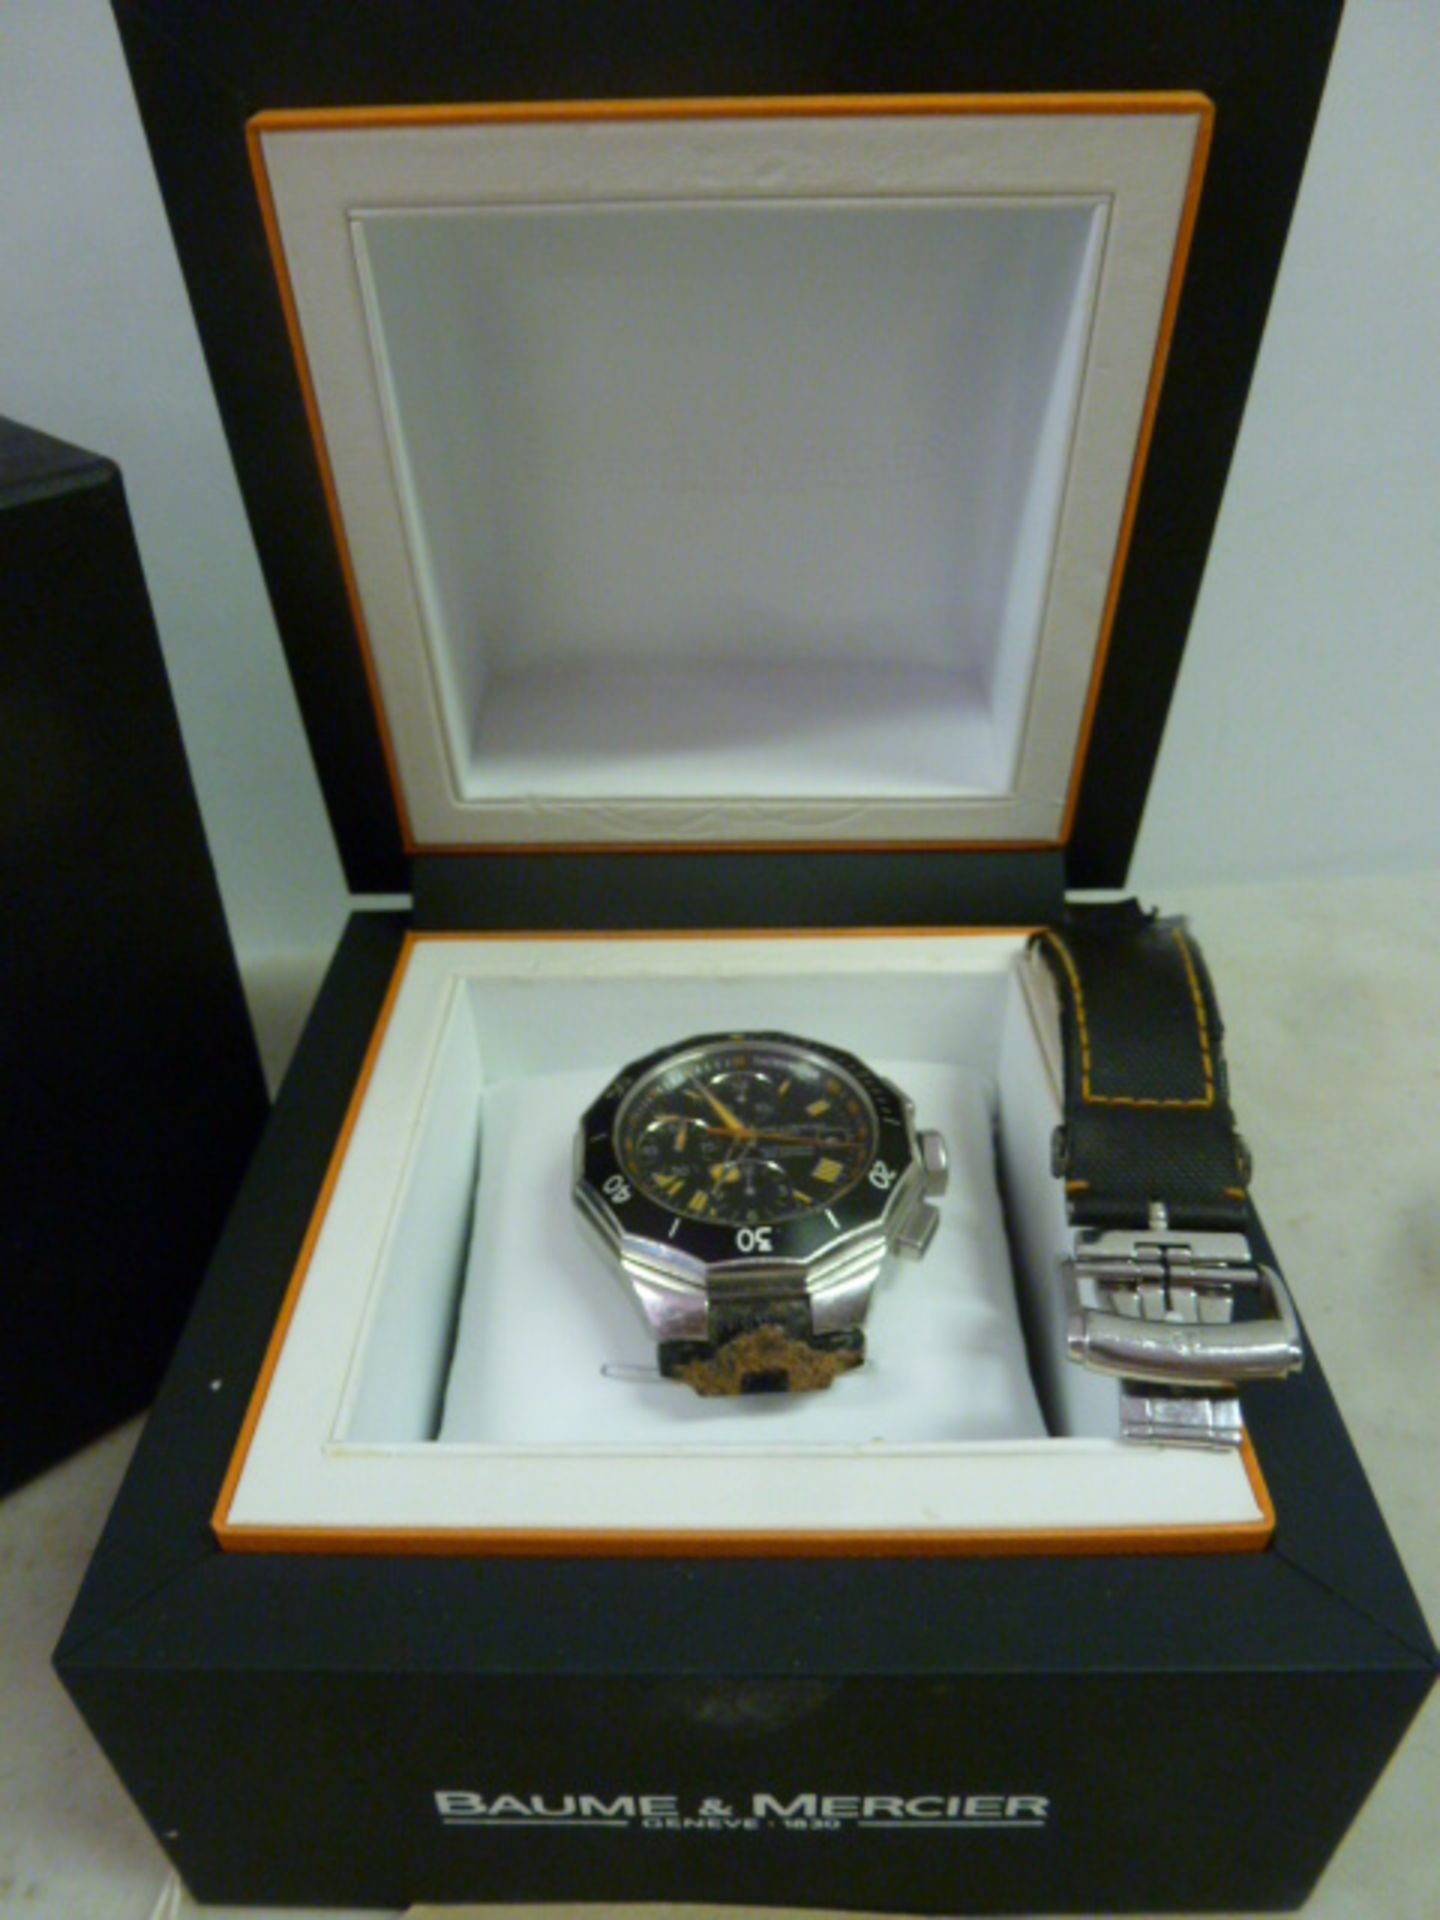 Baume & Mercier Riviera Automatic, Swiss Made Mens Wristwatch, In Original Presentation Box. - Image 2 of 7